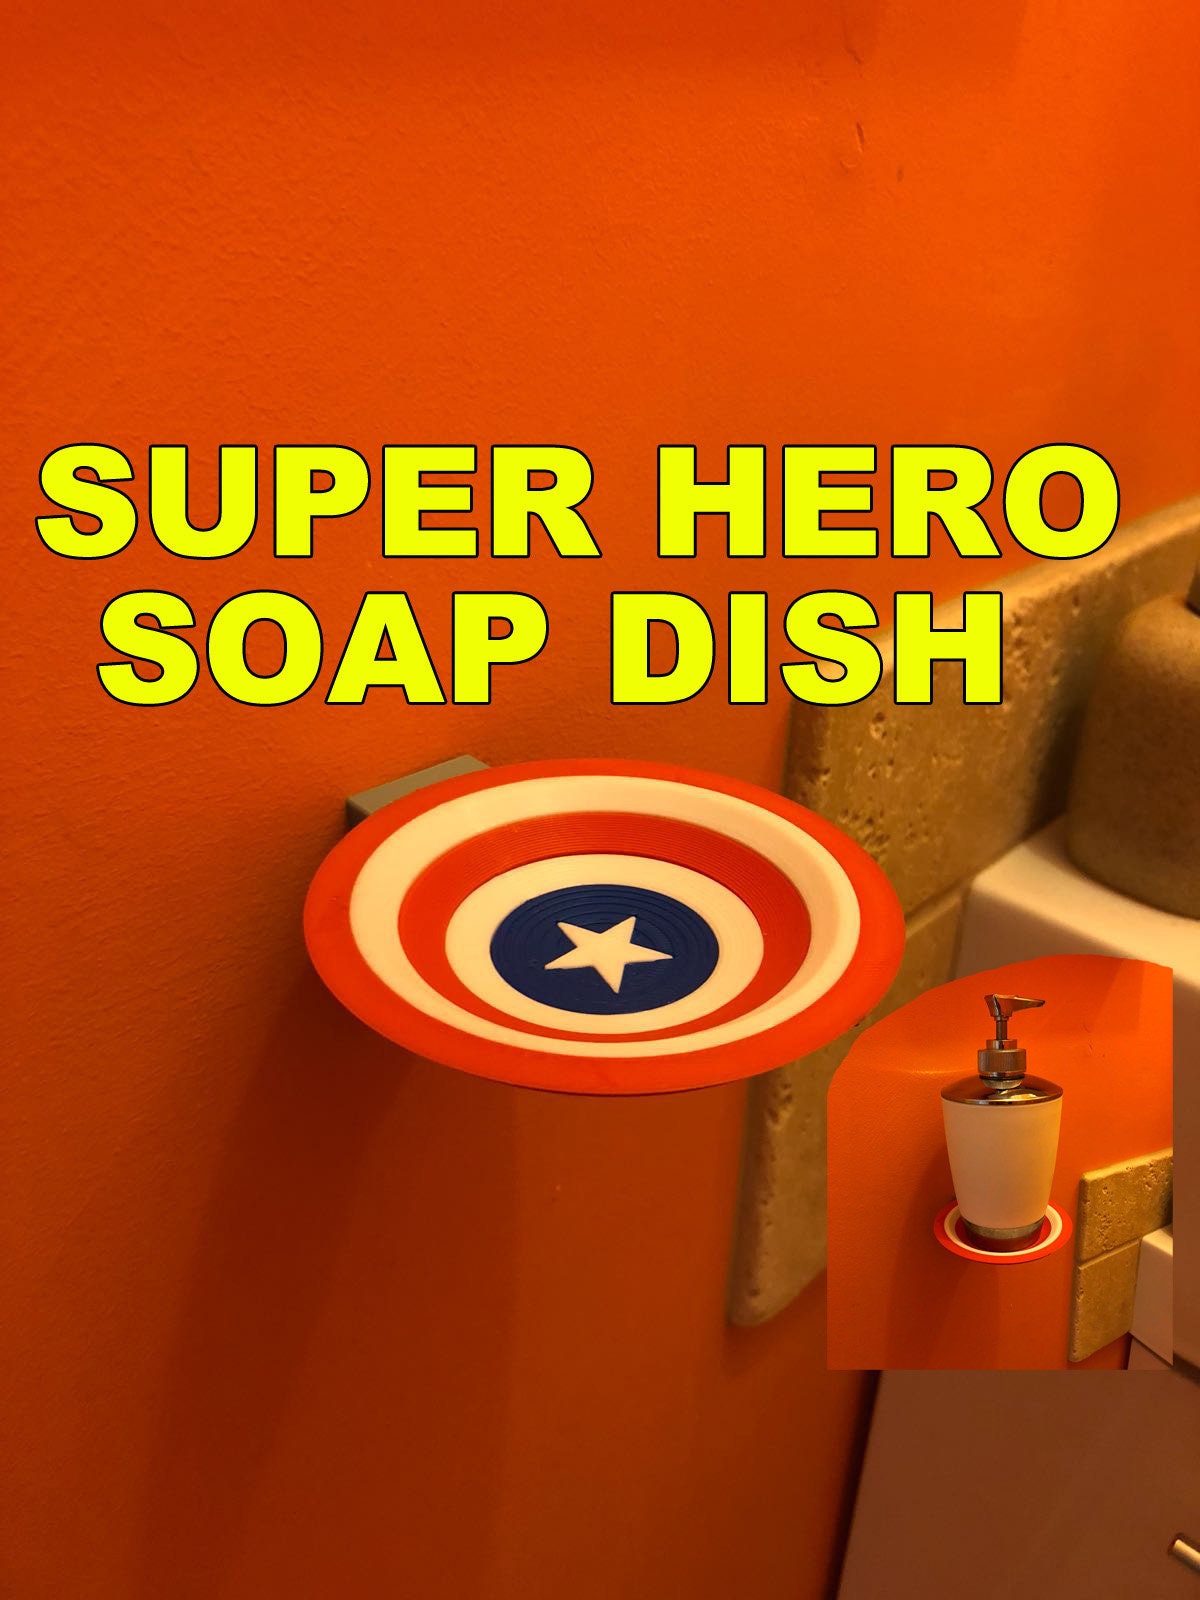 Superhero-Inspired Soap : foam soap